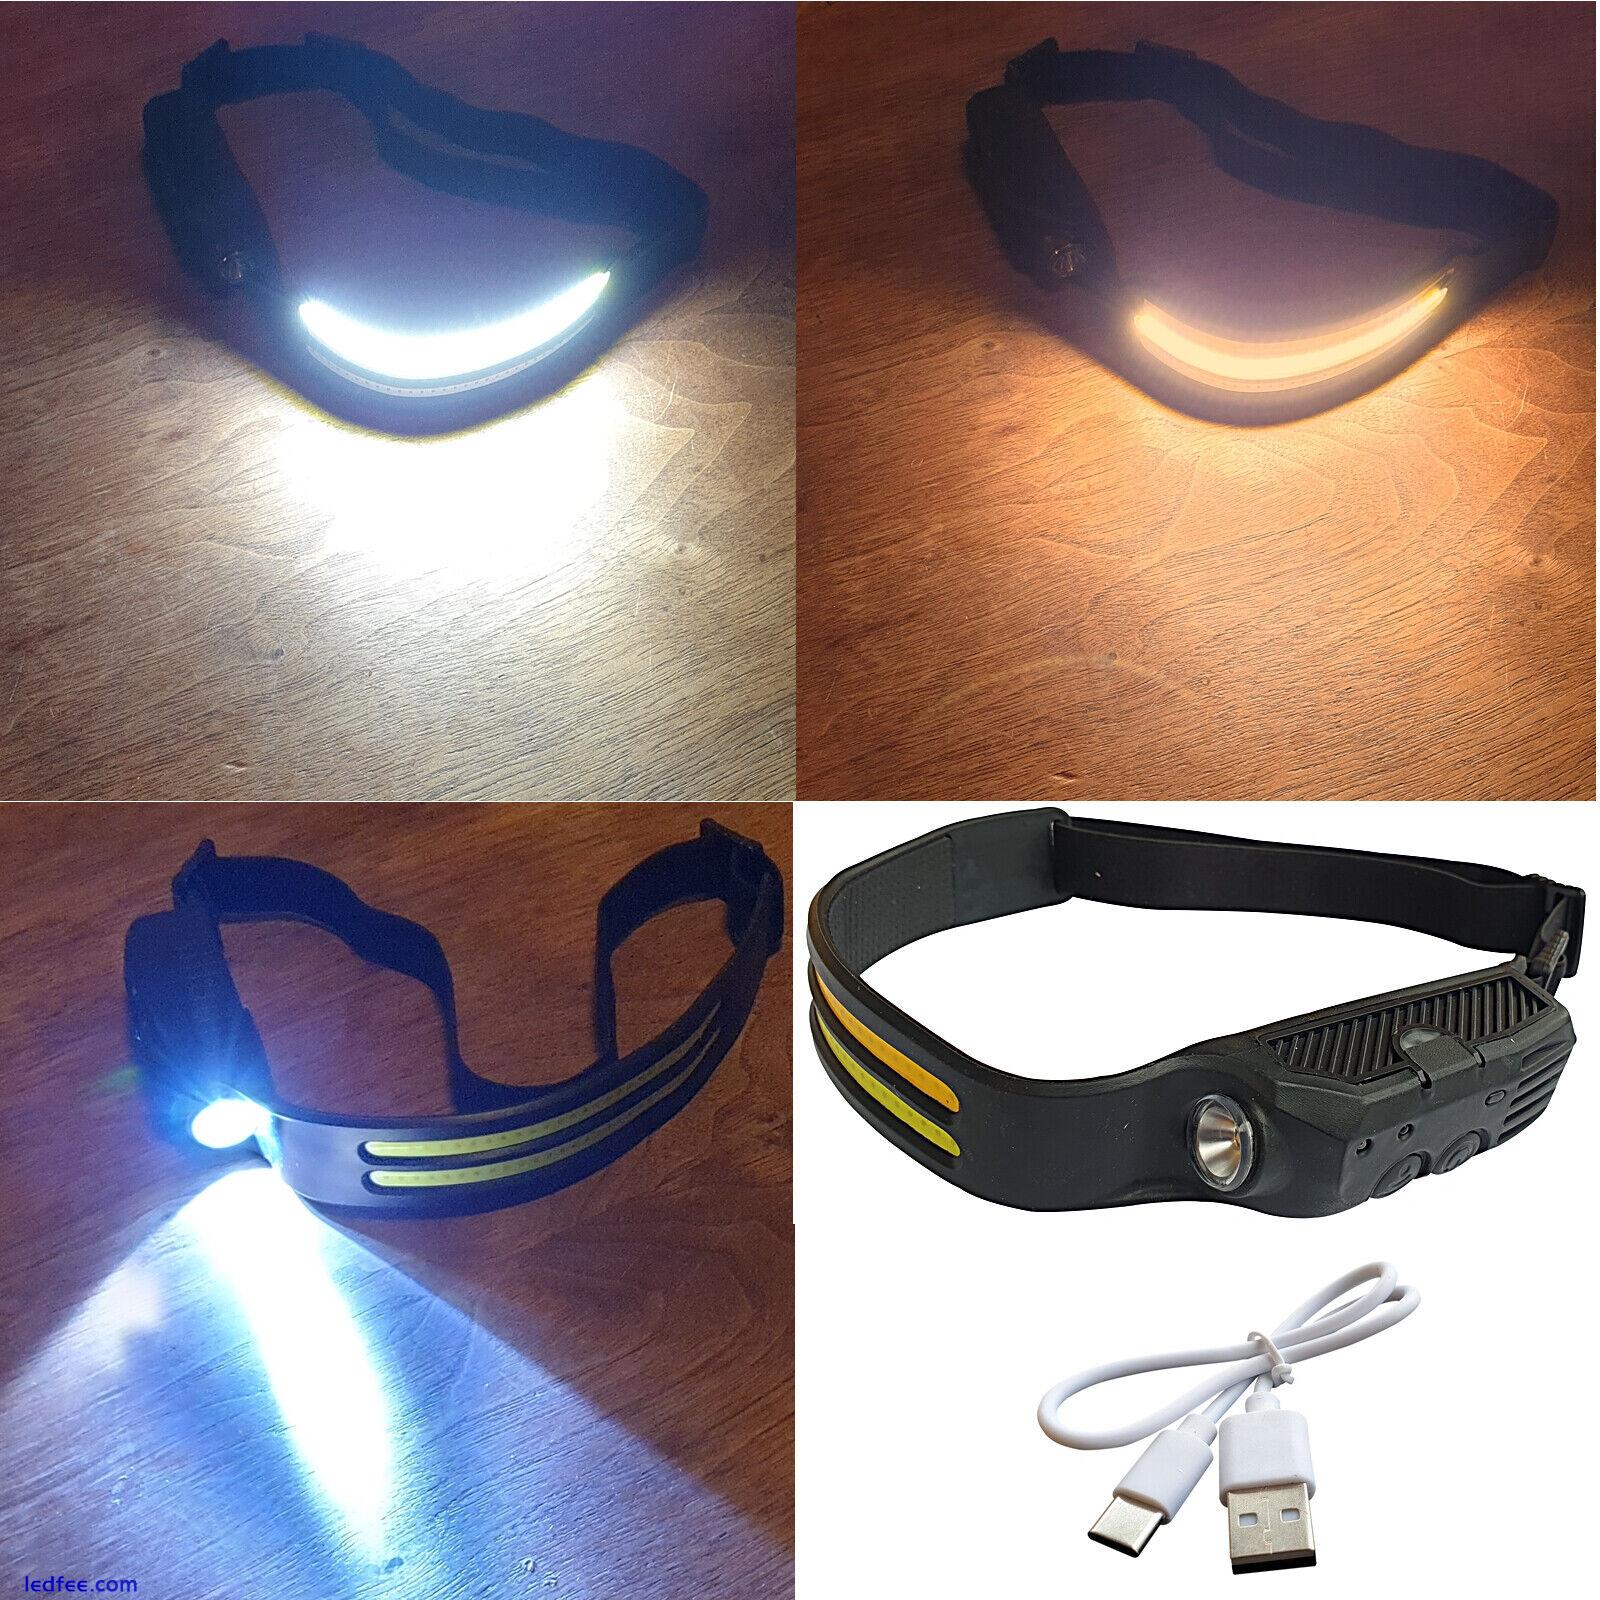 LED Headlamp Cob Headlamp Sensor Headlight USB Rechargeable Waterproof 4 